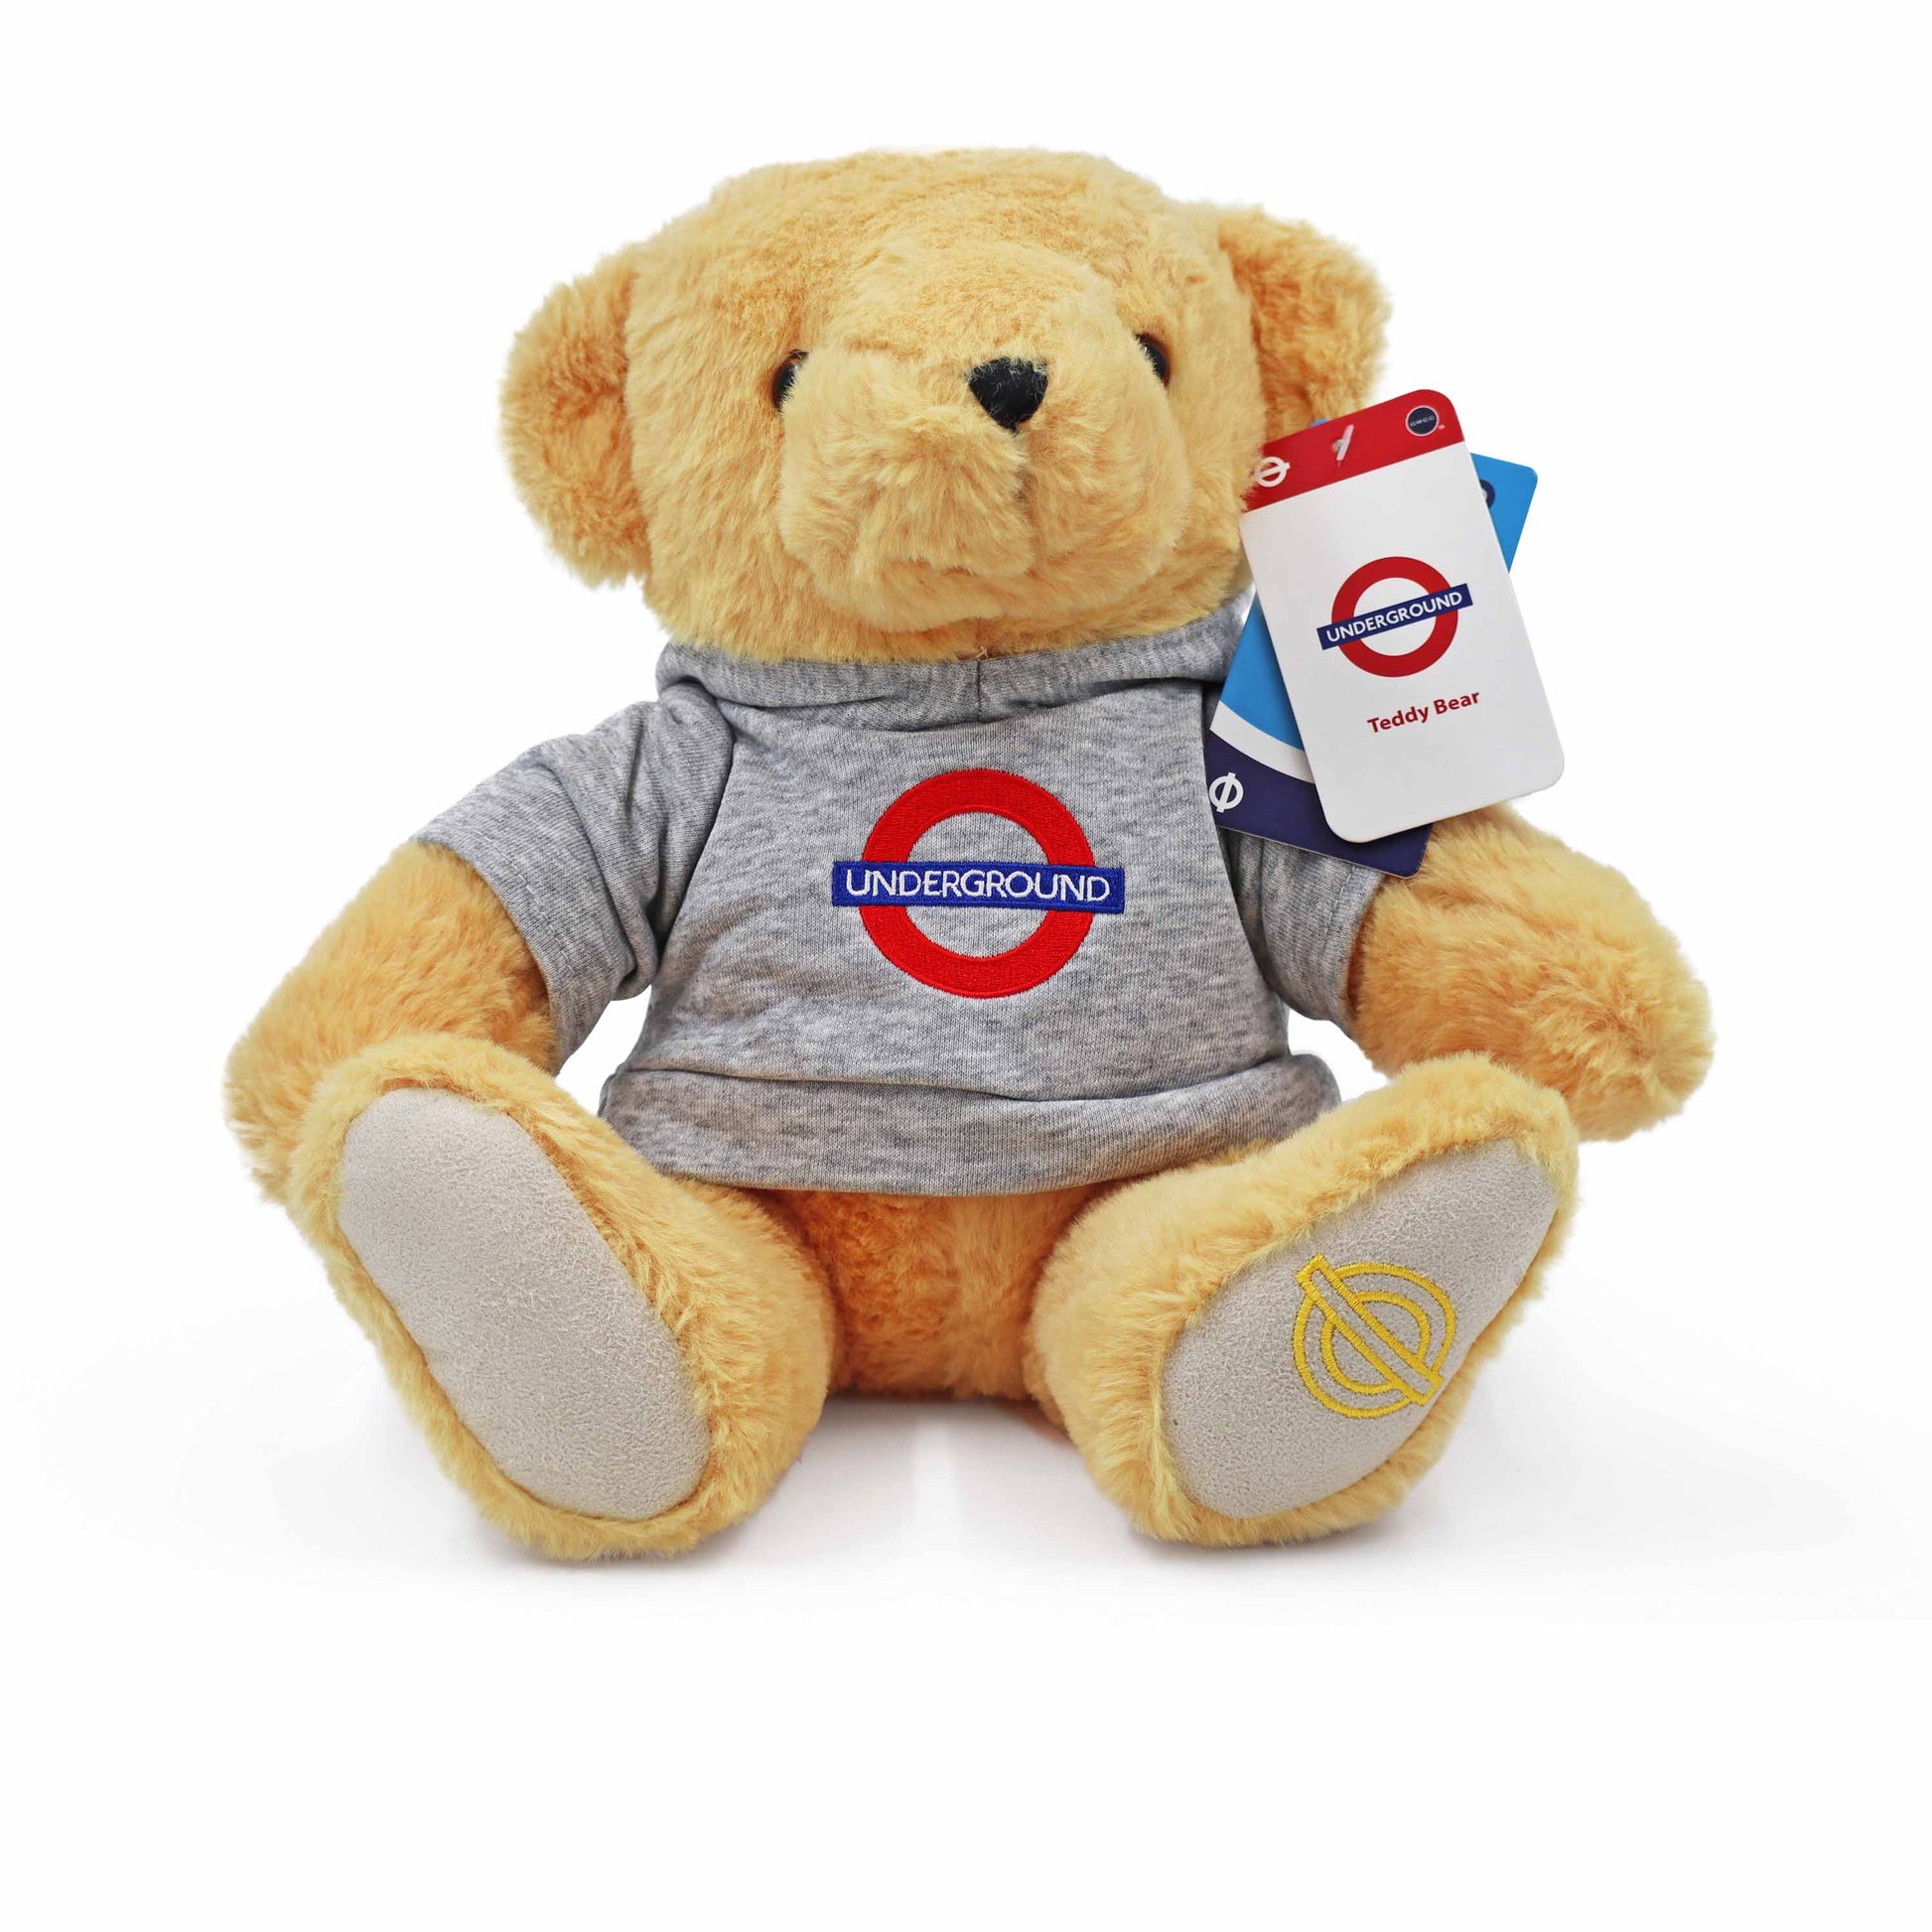 London Underground Teddy Bear - 'UNDERGROUND' Light Grey - 25cm - TFL Merchandise & Toys